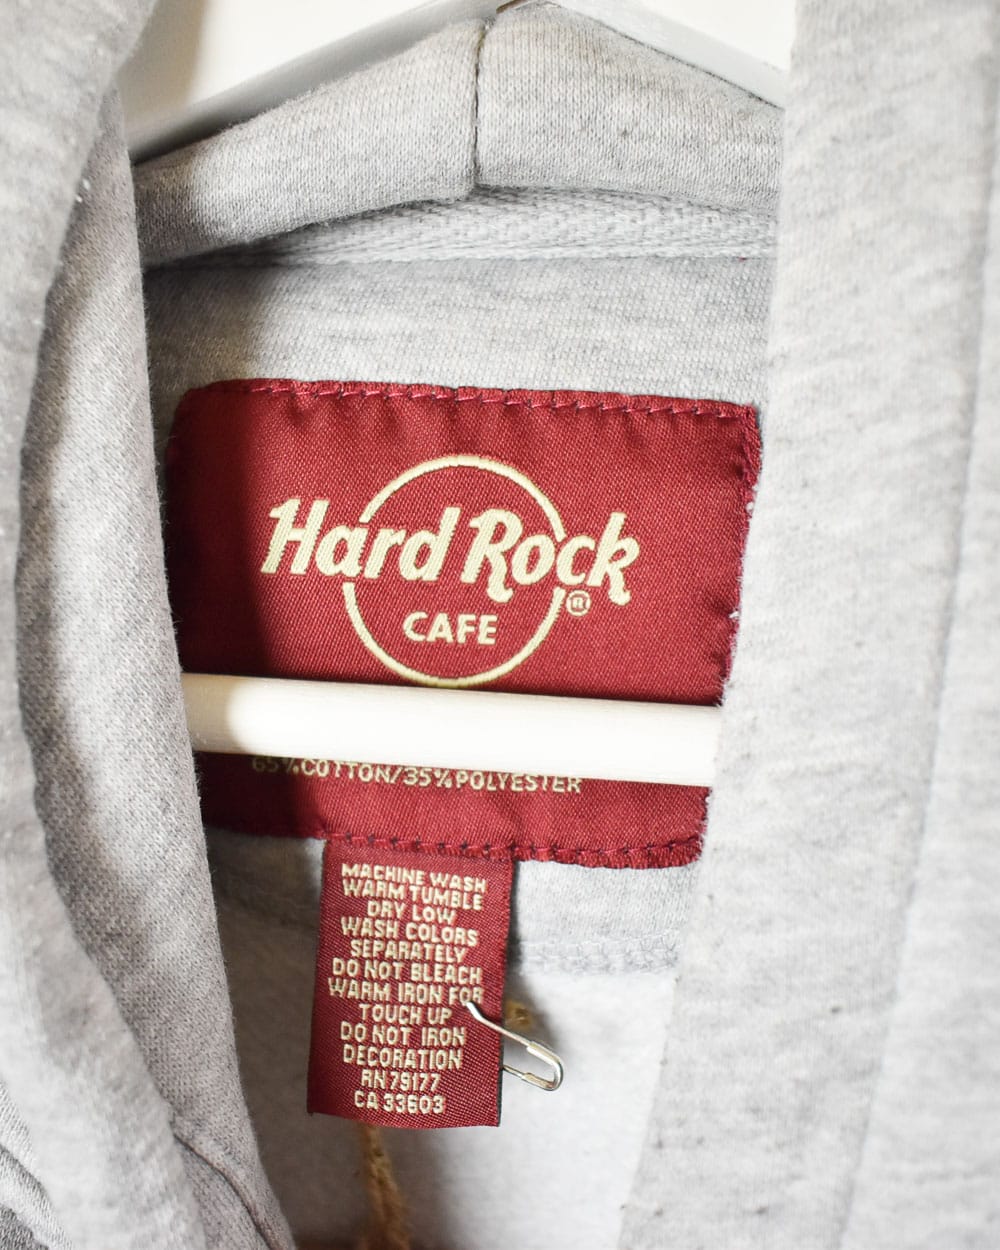 Stone Hard Rock Café Hollywood Hoodie - Small